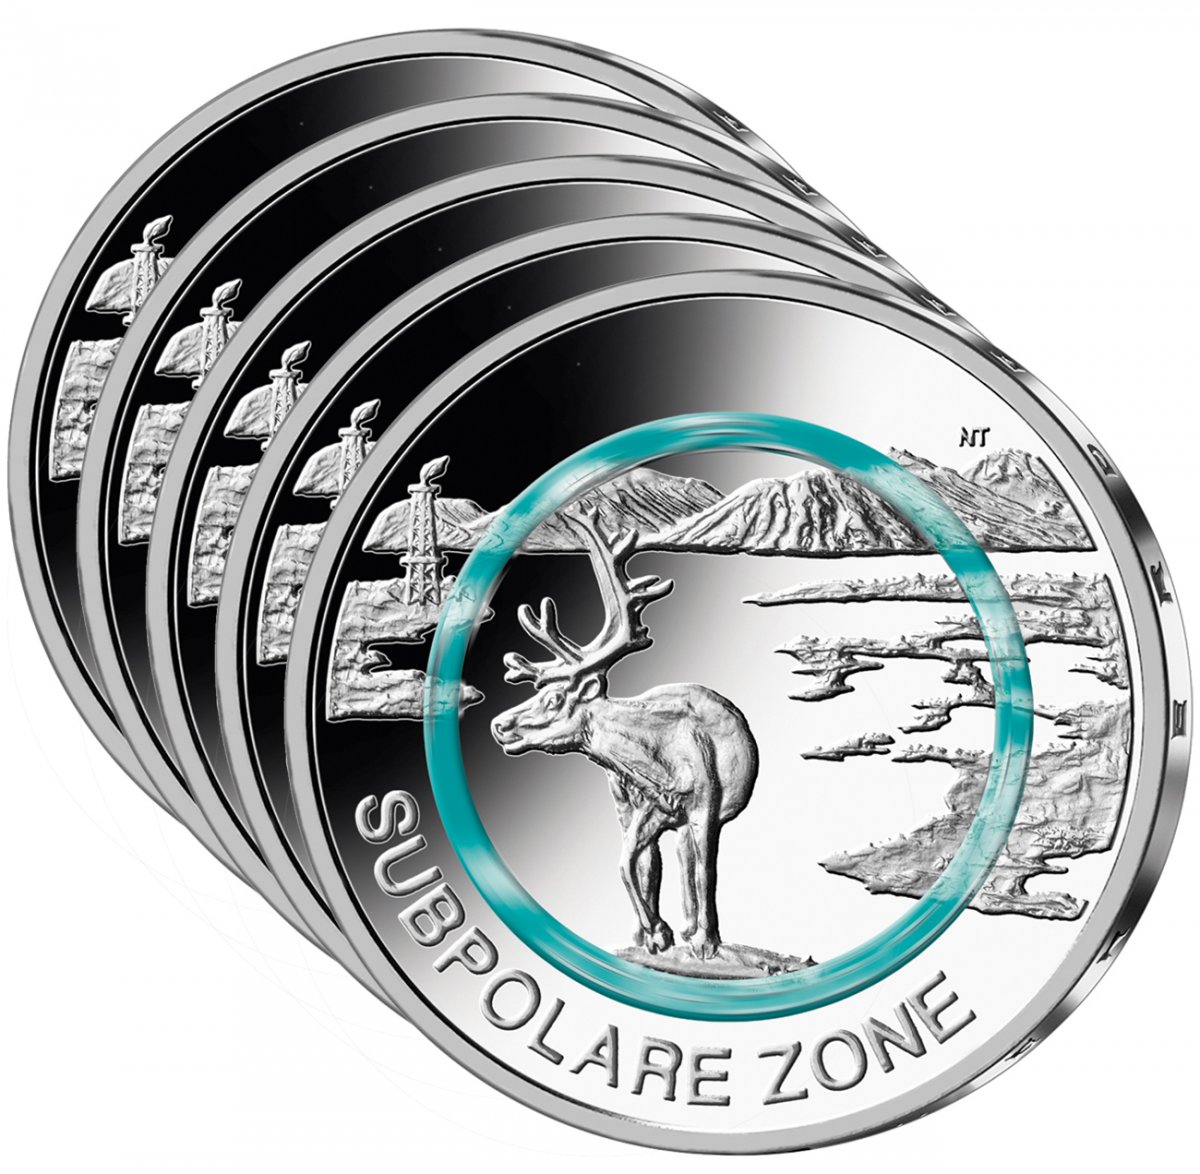 5-Euro-Polymerring-Sammlermünzen-Set 2020 "Subpolare Zone"                                           